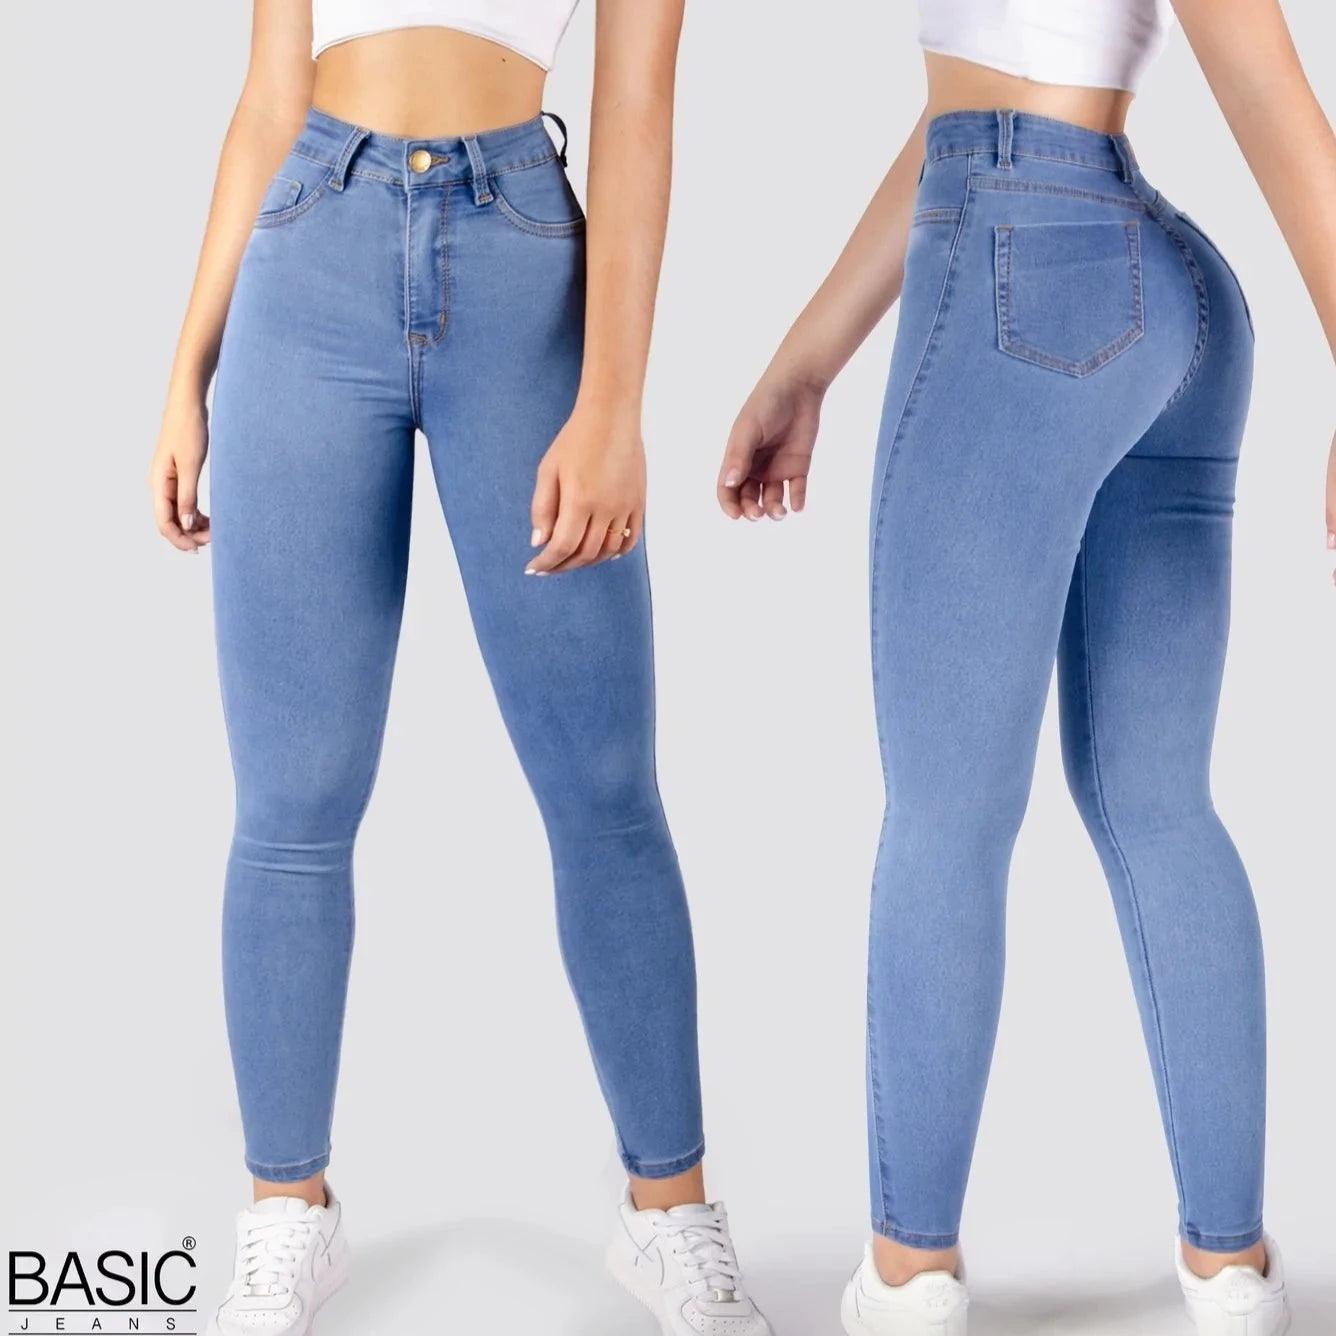 Basic Stretchy Legging Jeans - 13 Colorways